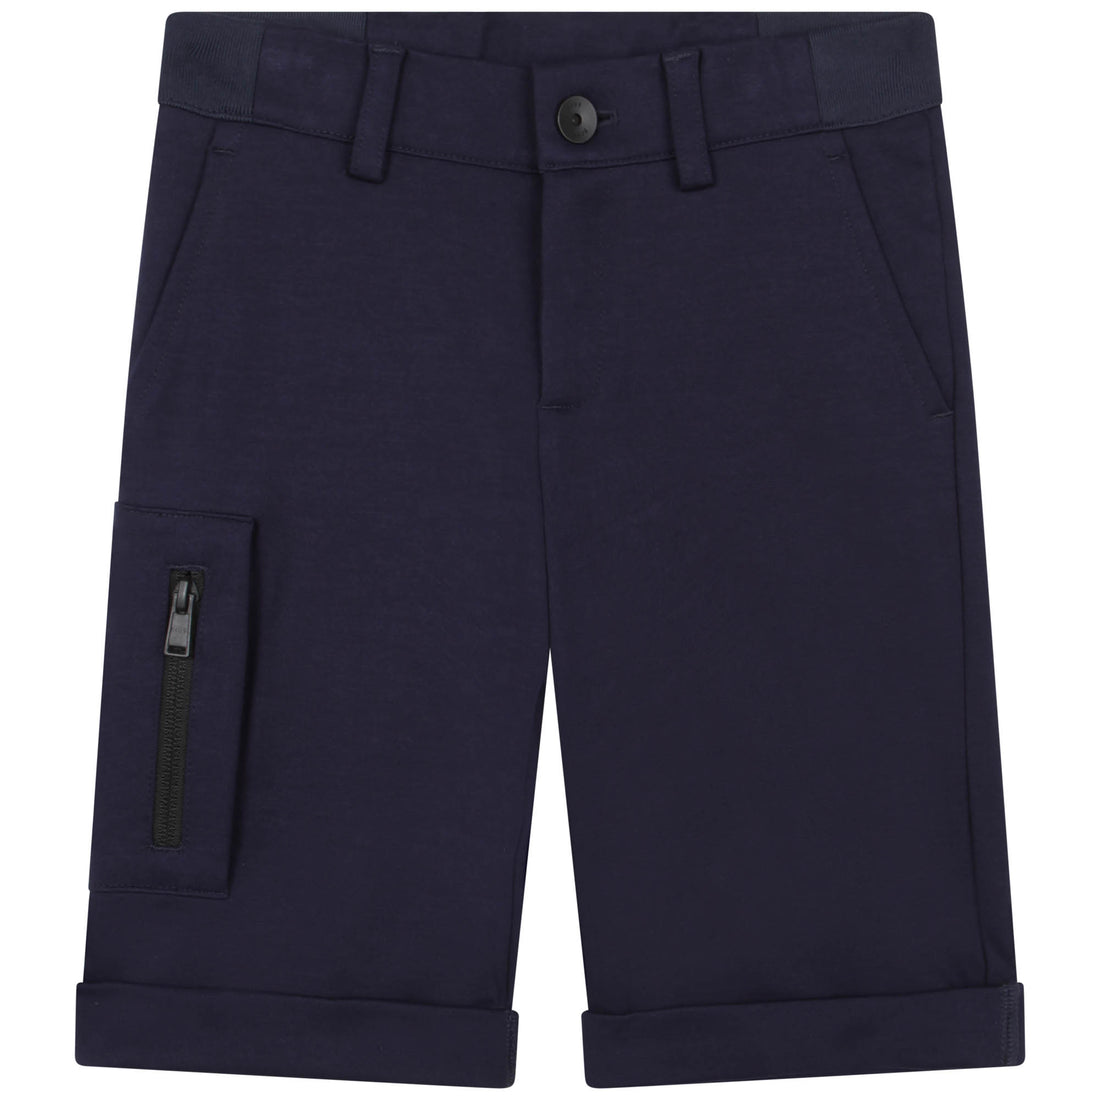 Hugo Boss Bermuda Shorts Style: J24817